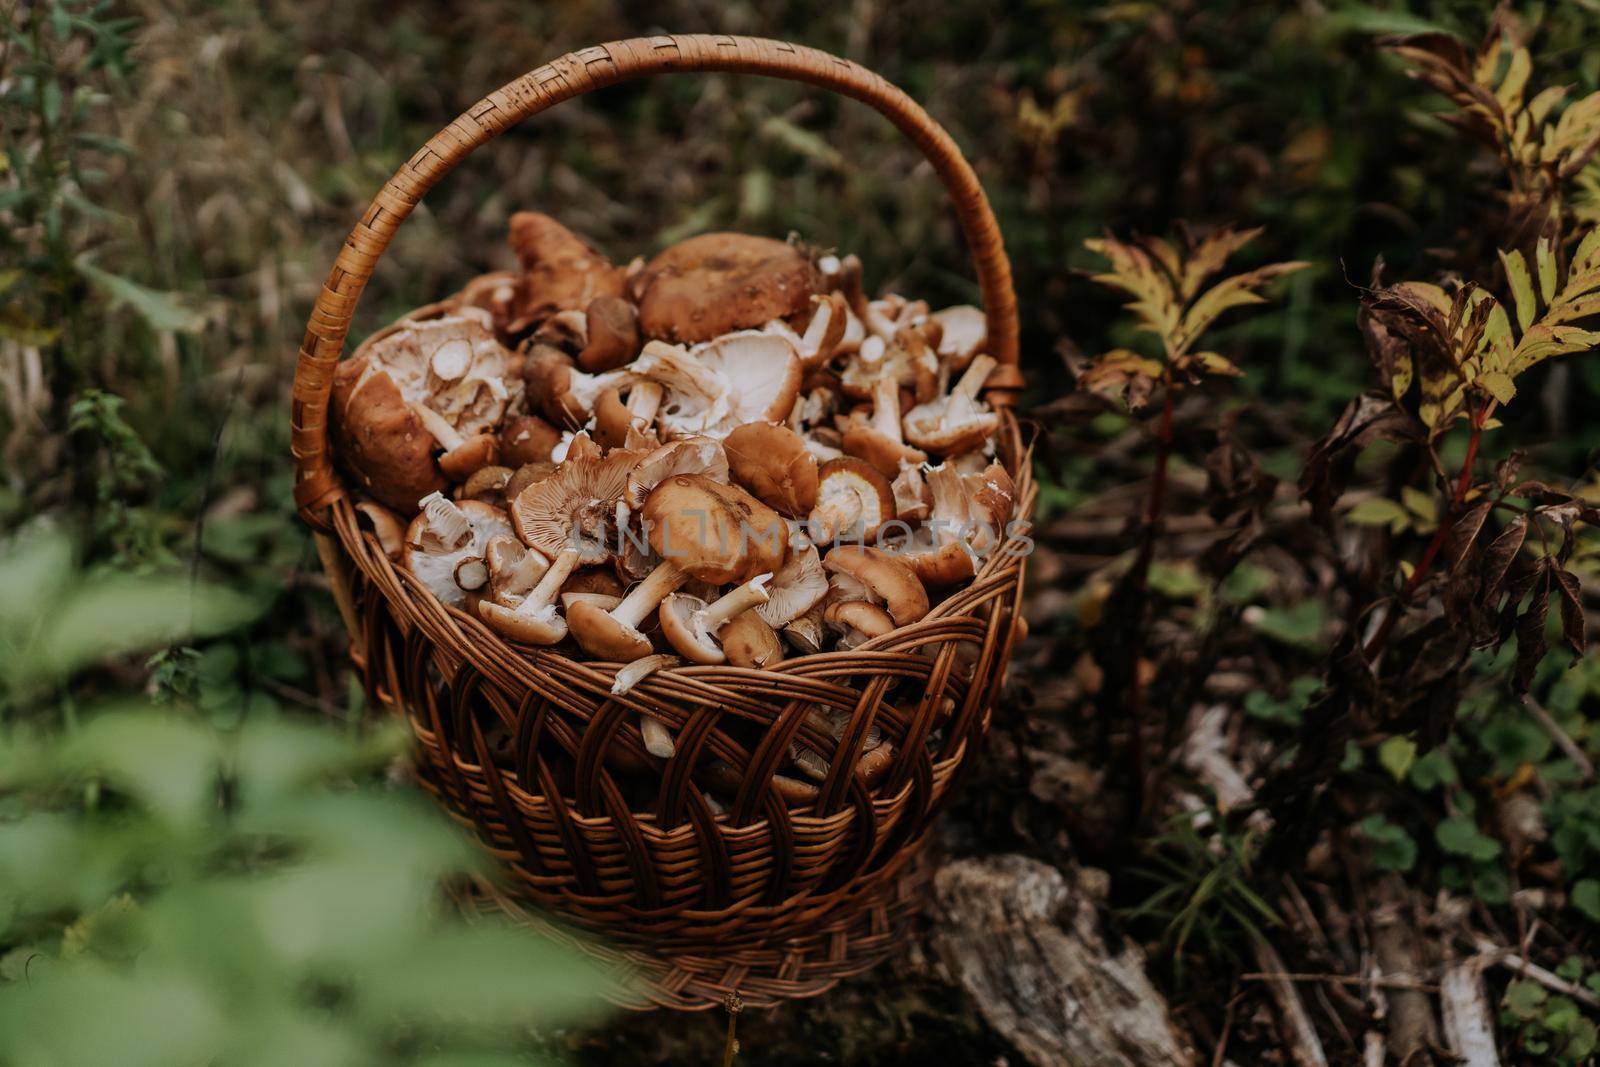 Basket full of gathered mushrooms from forest. Honey agarics, fungus concept, by kristina_kokhanova